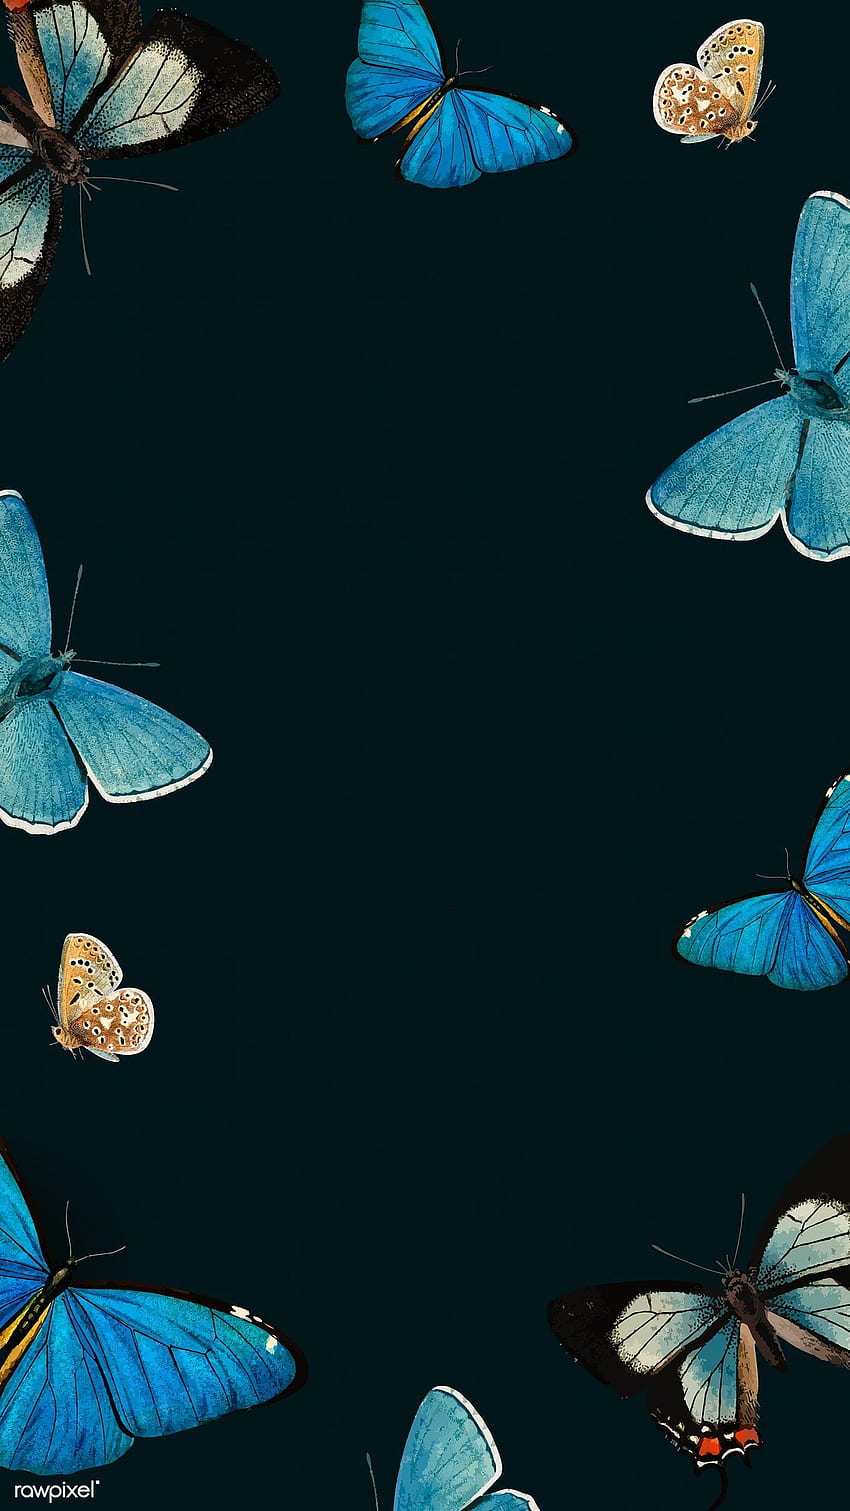 Mariposas azules estampadas en un vector de teléfono móvil negro. prima por. Mariposa azul, iphone de mariposa, teléfono negro, mariposa azul oscuro fondo de pantalla del teléfono